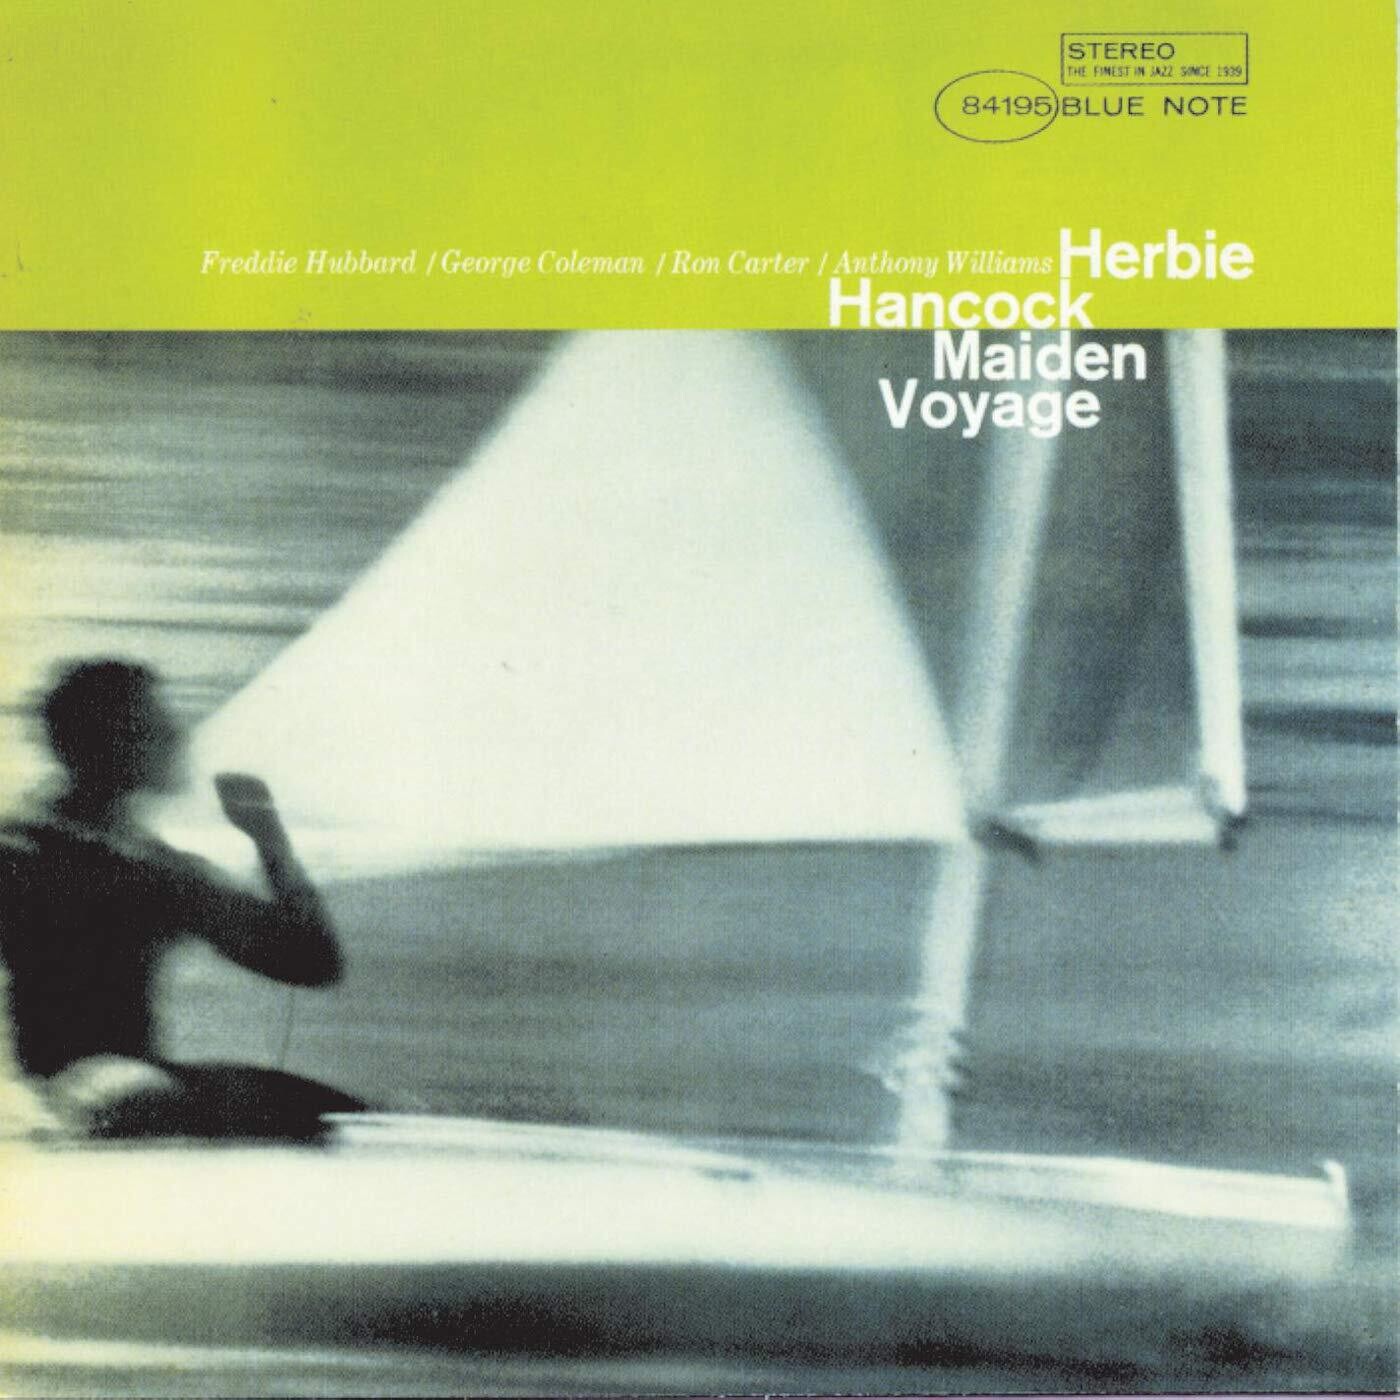 Herbie Hancock "Maiden Voyage"